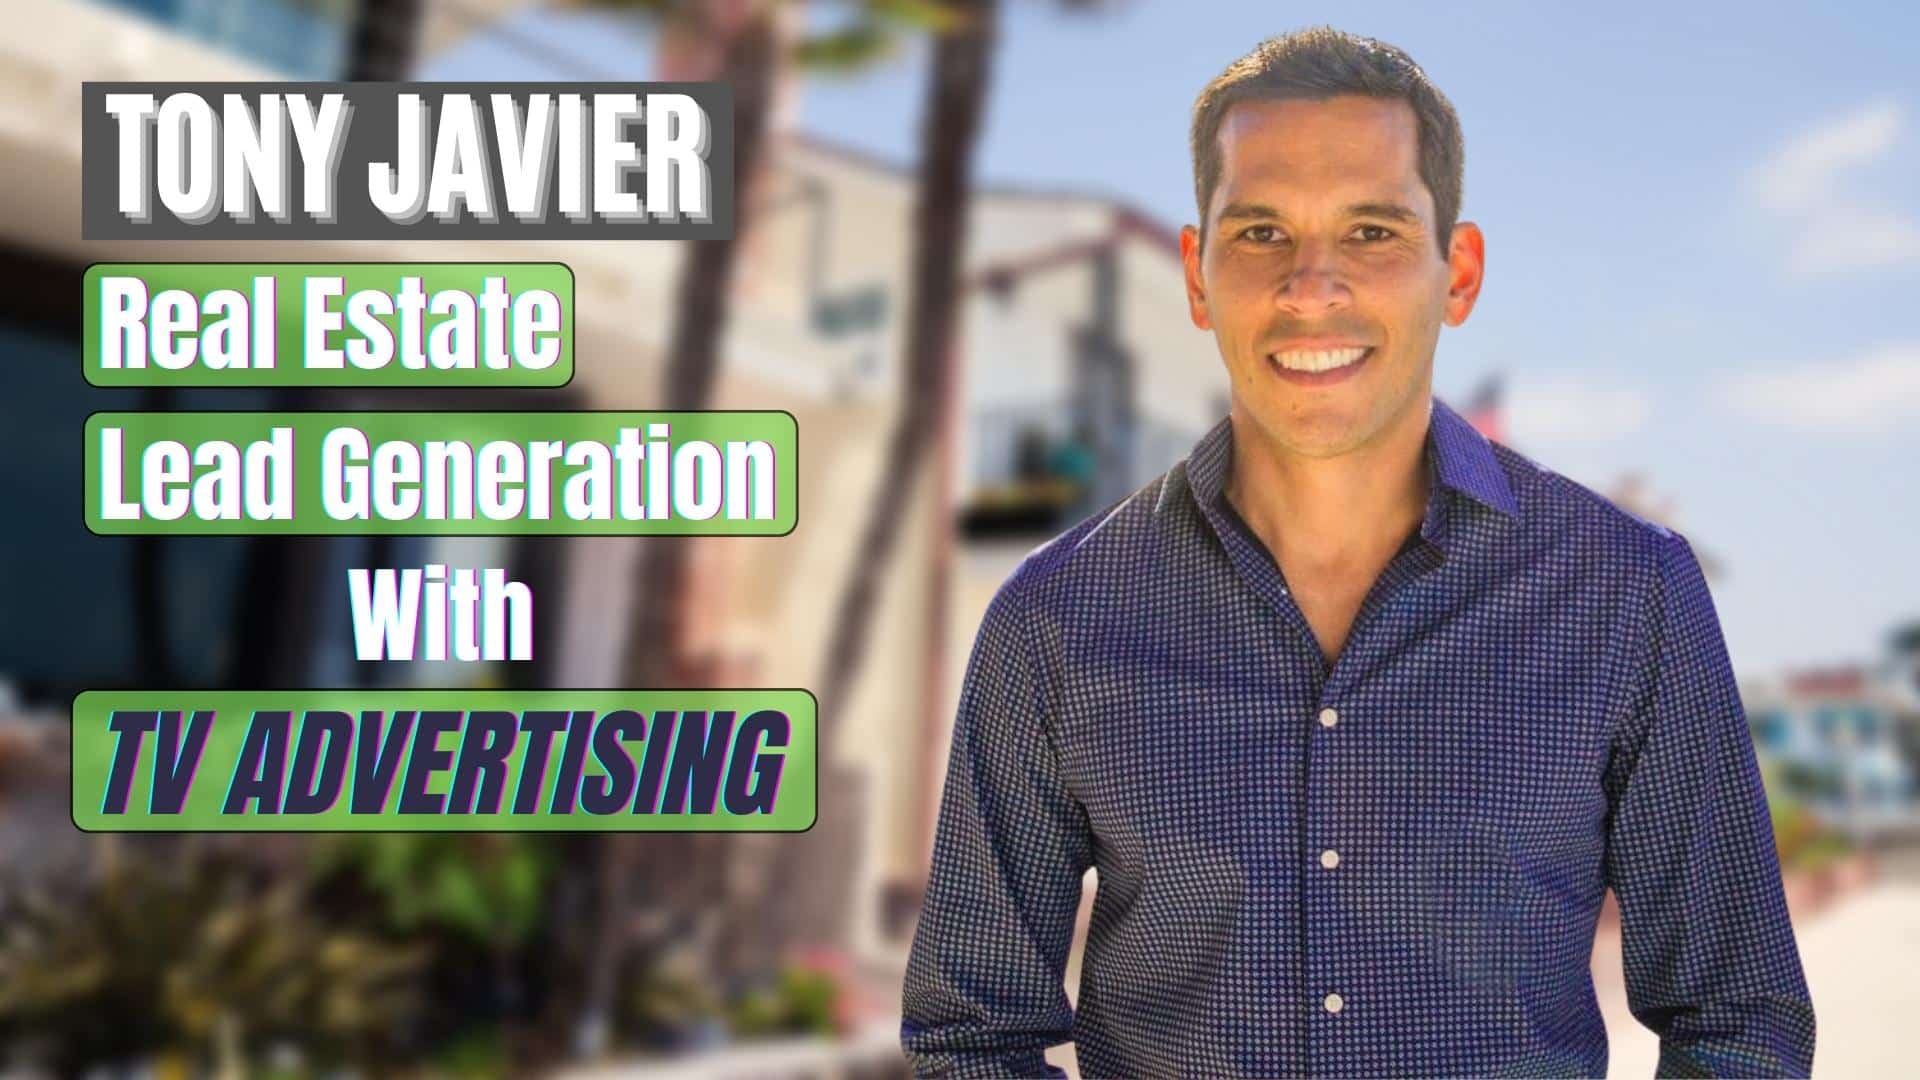 Tony Javier in San Diego doing TV advertising